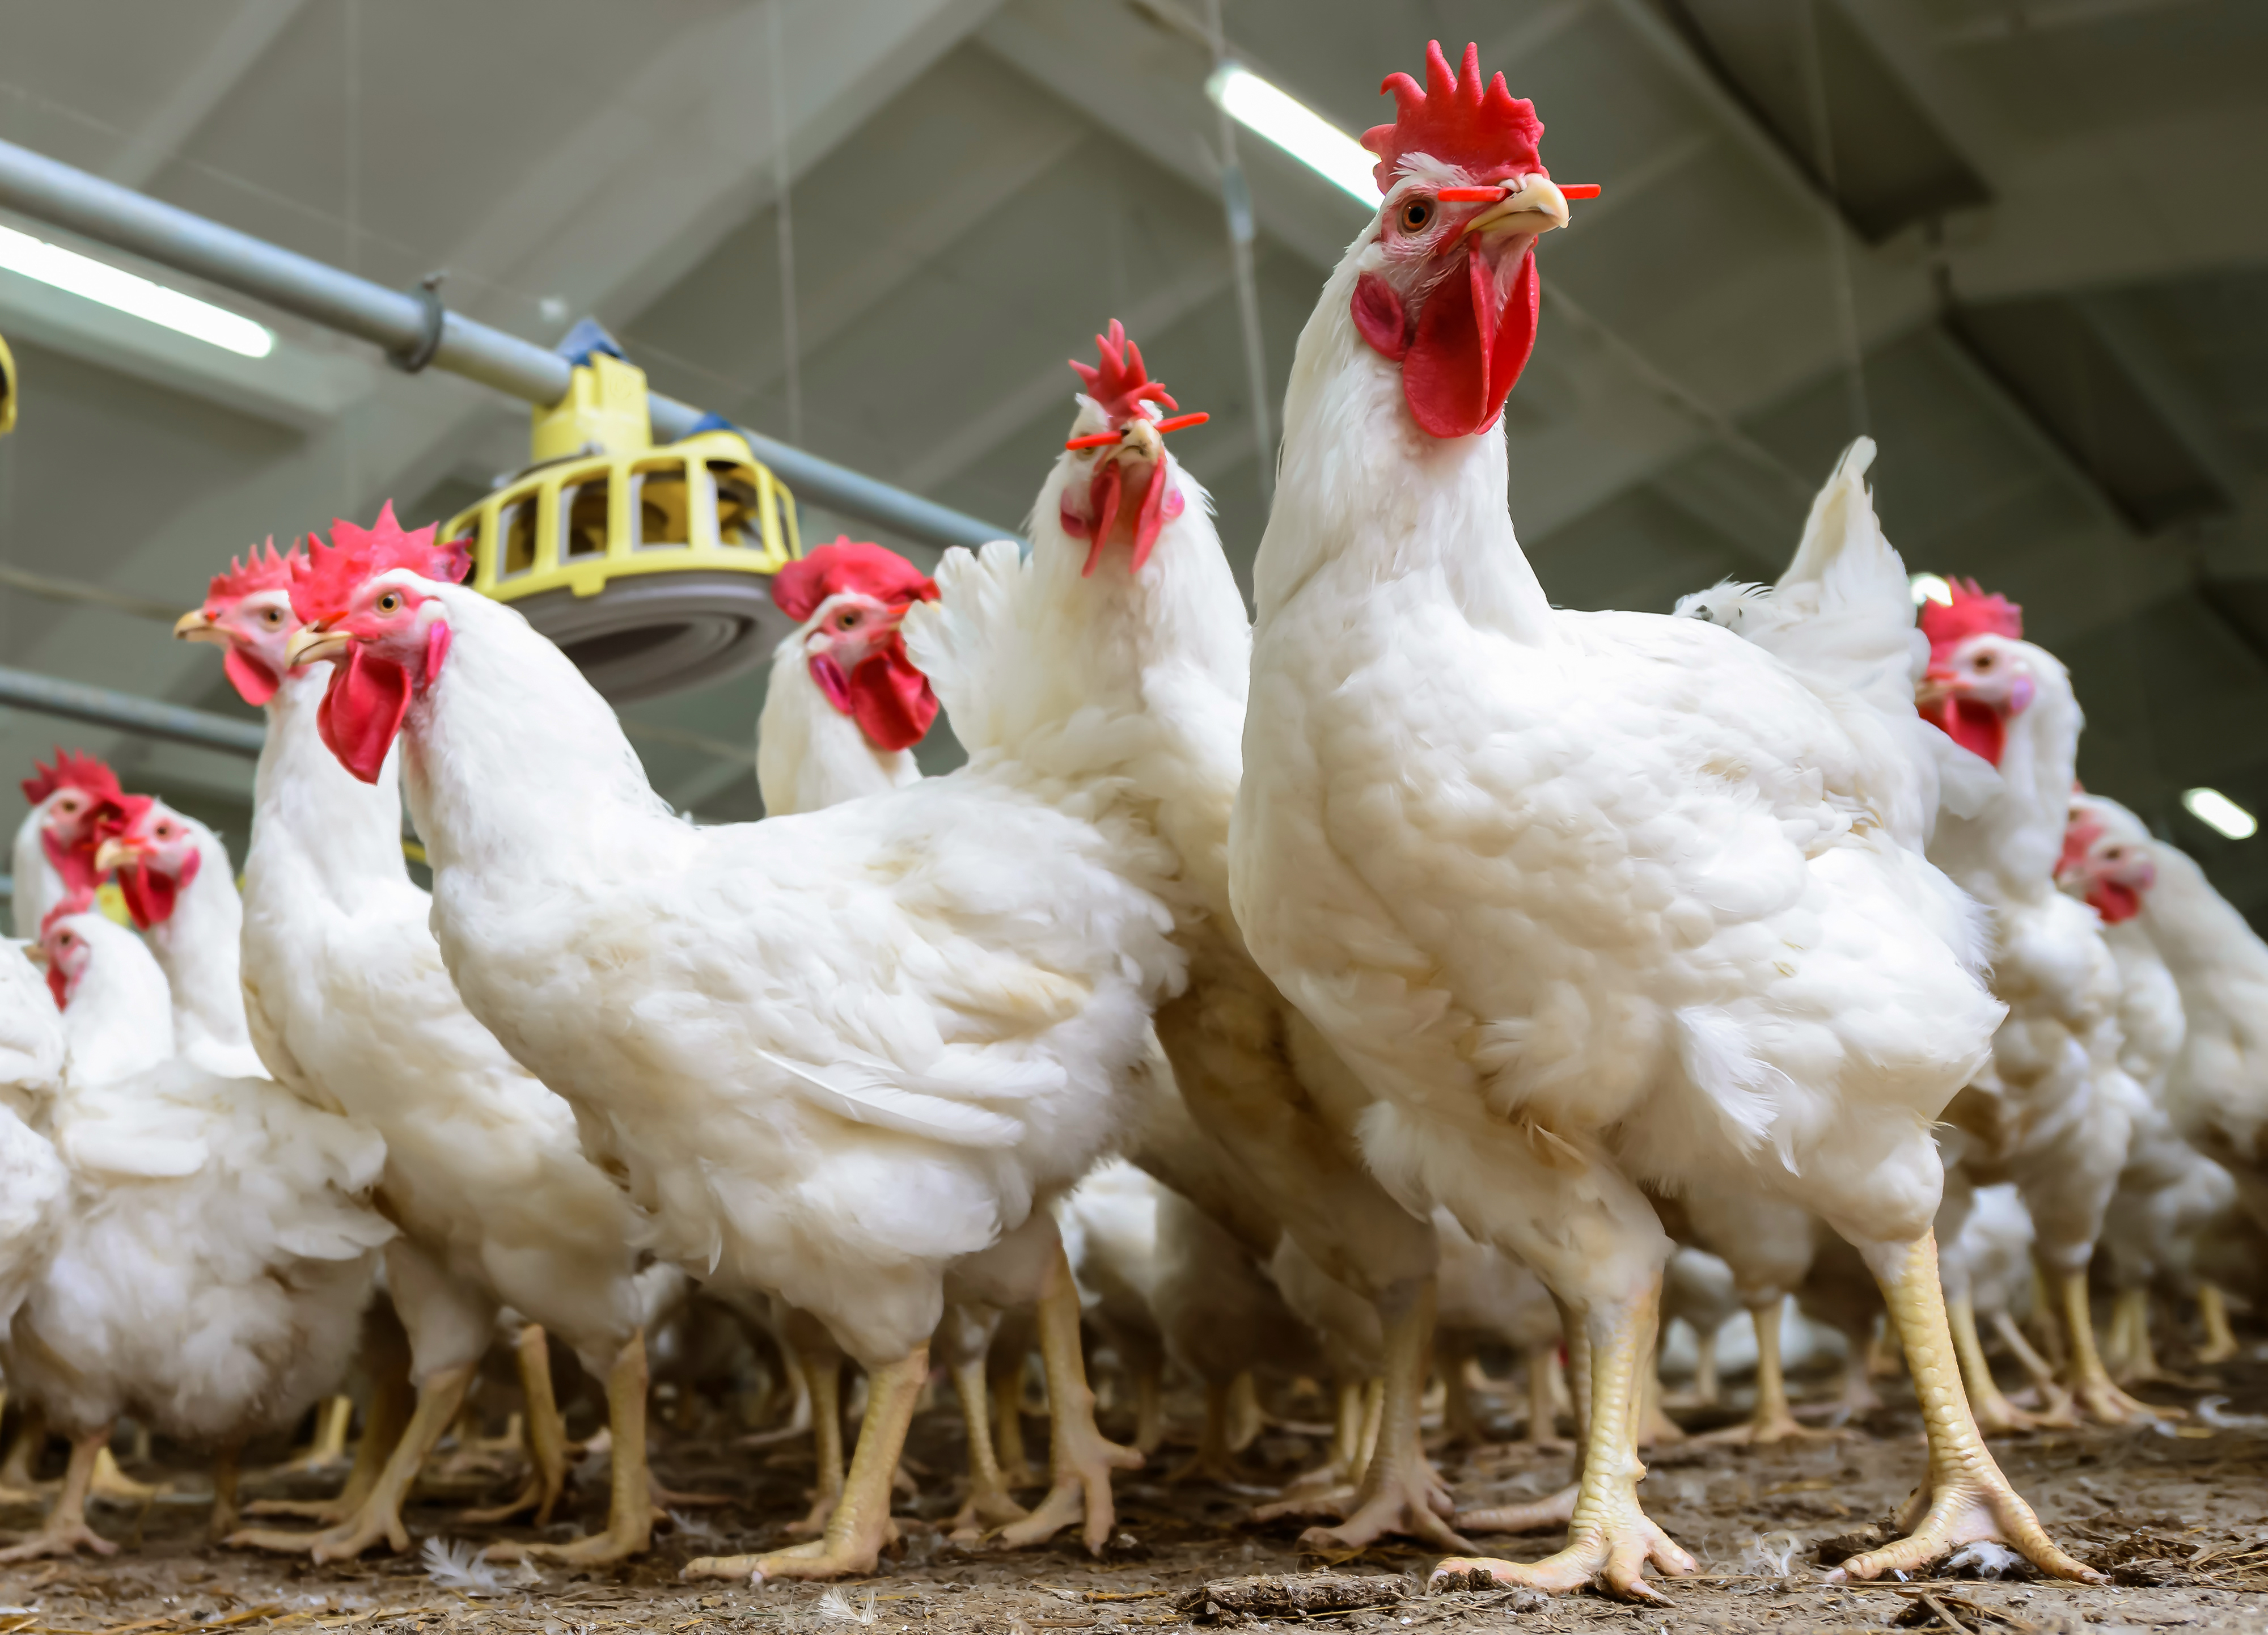 Pengiriman Membludak, Harga Daging Ayam Turun